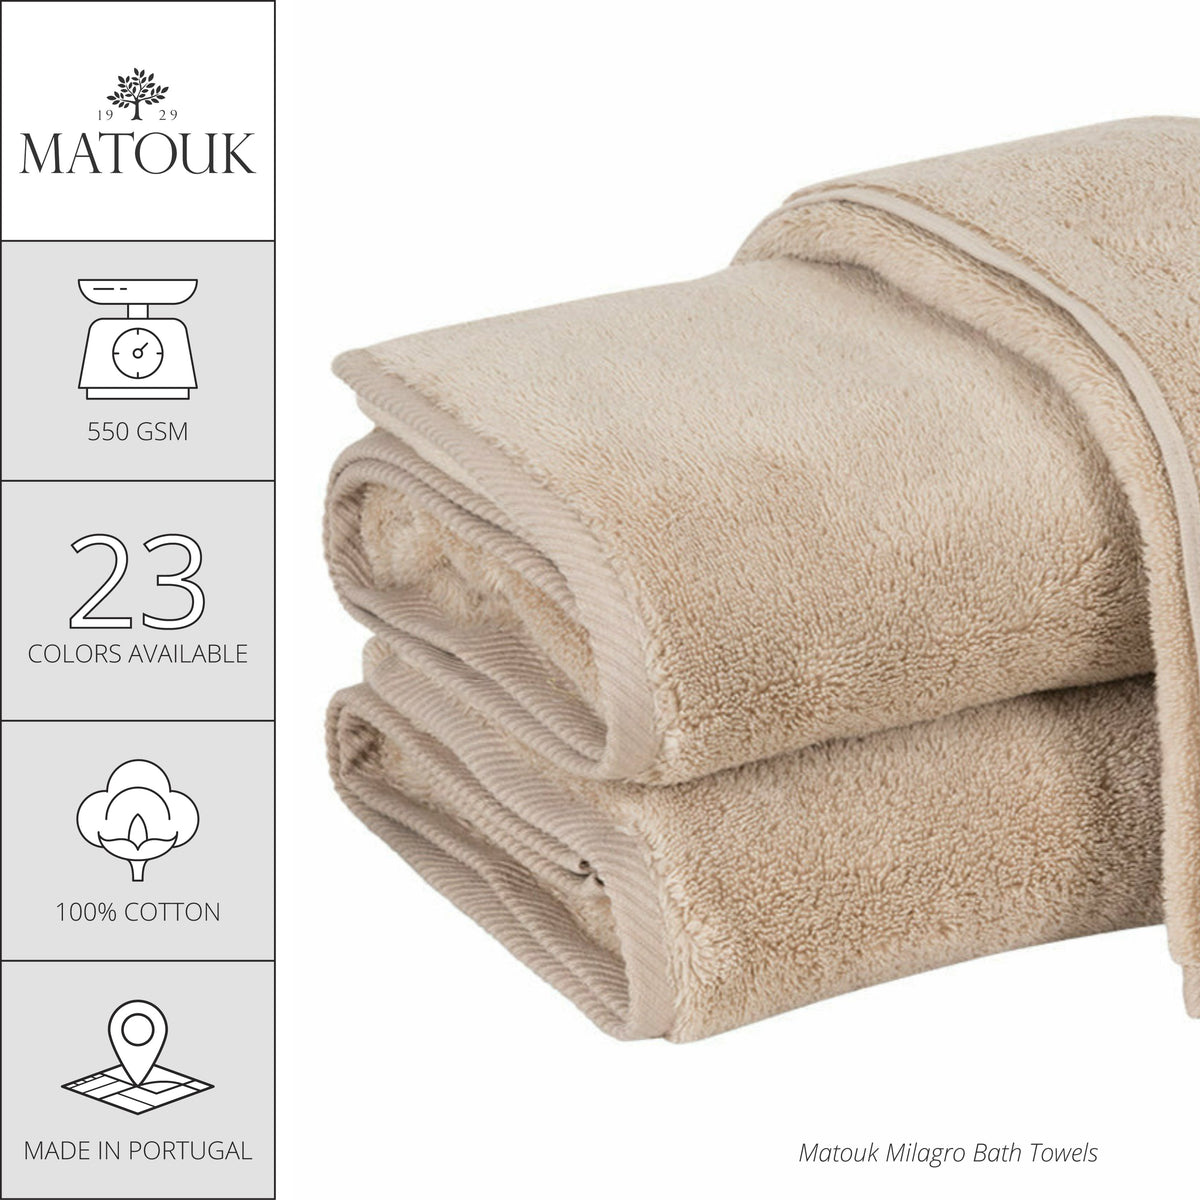 Matouk Milagro Bath Towels and Mats - Aegean